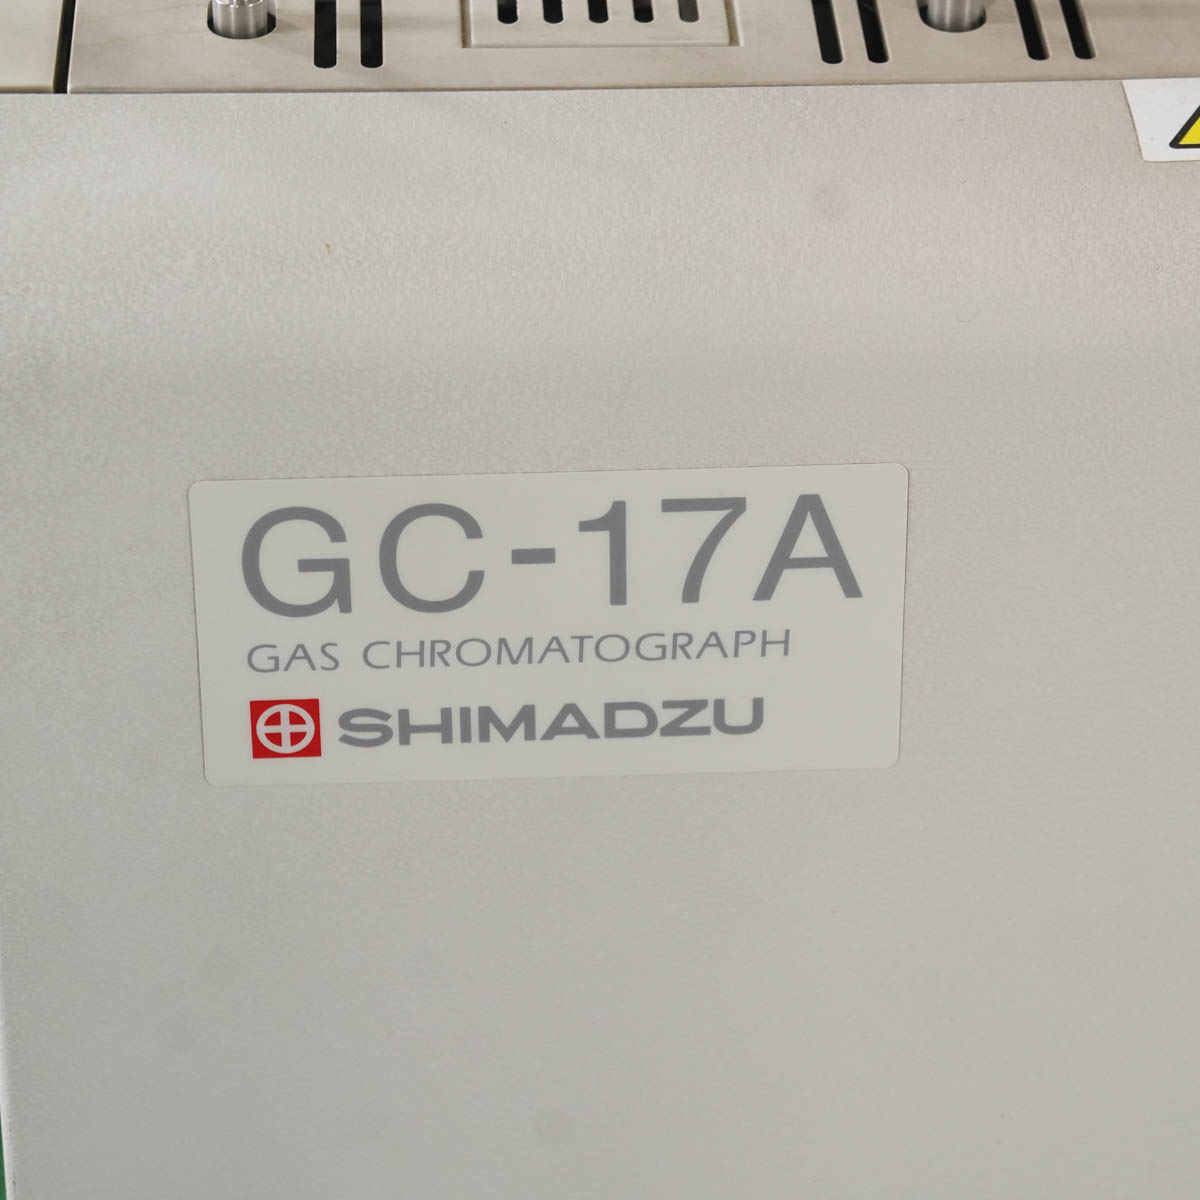 DW]USED 8日保証 セット SHIMADZU GC-17A GCMS-QP5000 Ver2 GAS CHROMATOGRAPH MASS  SPECTROMETER ガスクロマトグラフ ソ...[04568-0007] 分析機器,GC(ガスクロマトグラフ)  中古販売分析機器計測器総合商社ディルウィングス